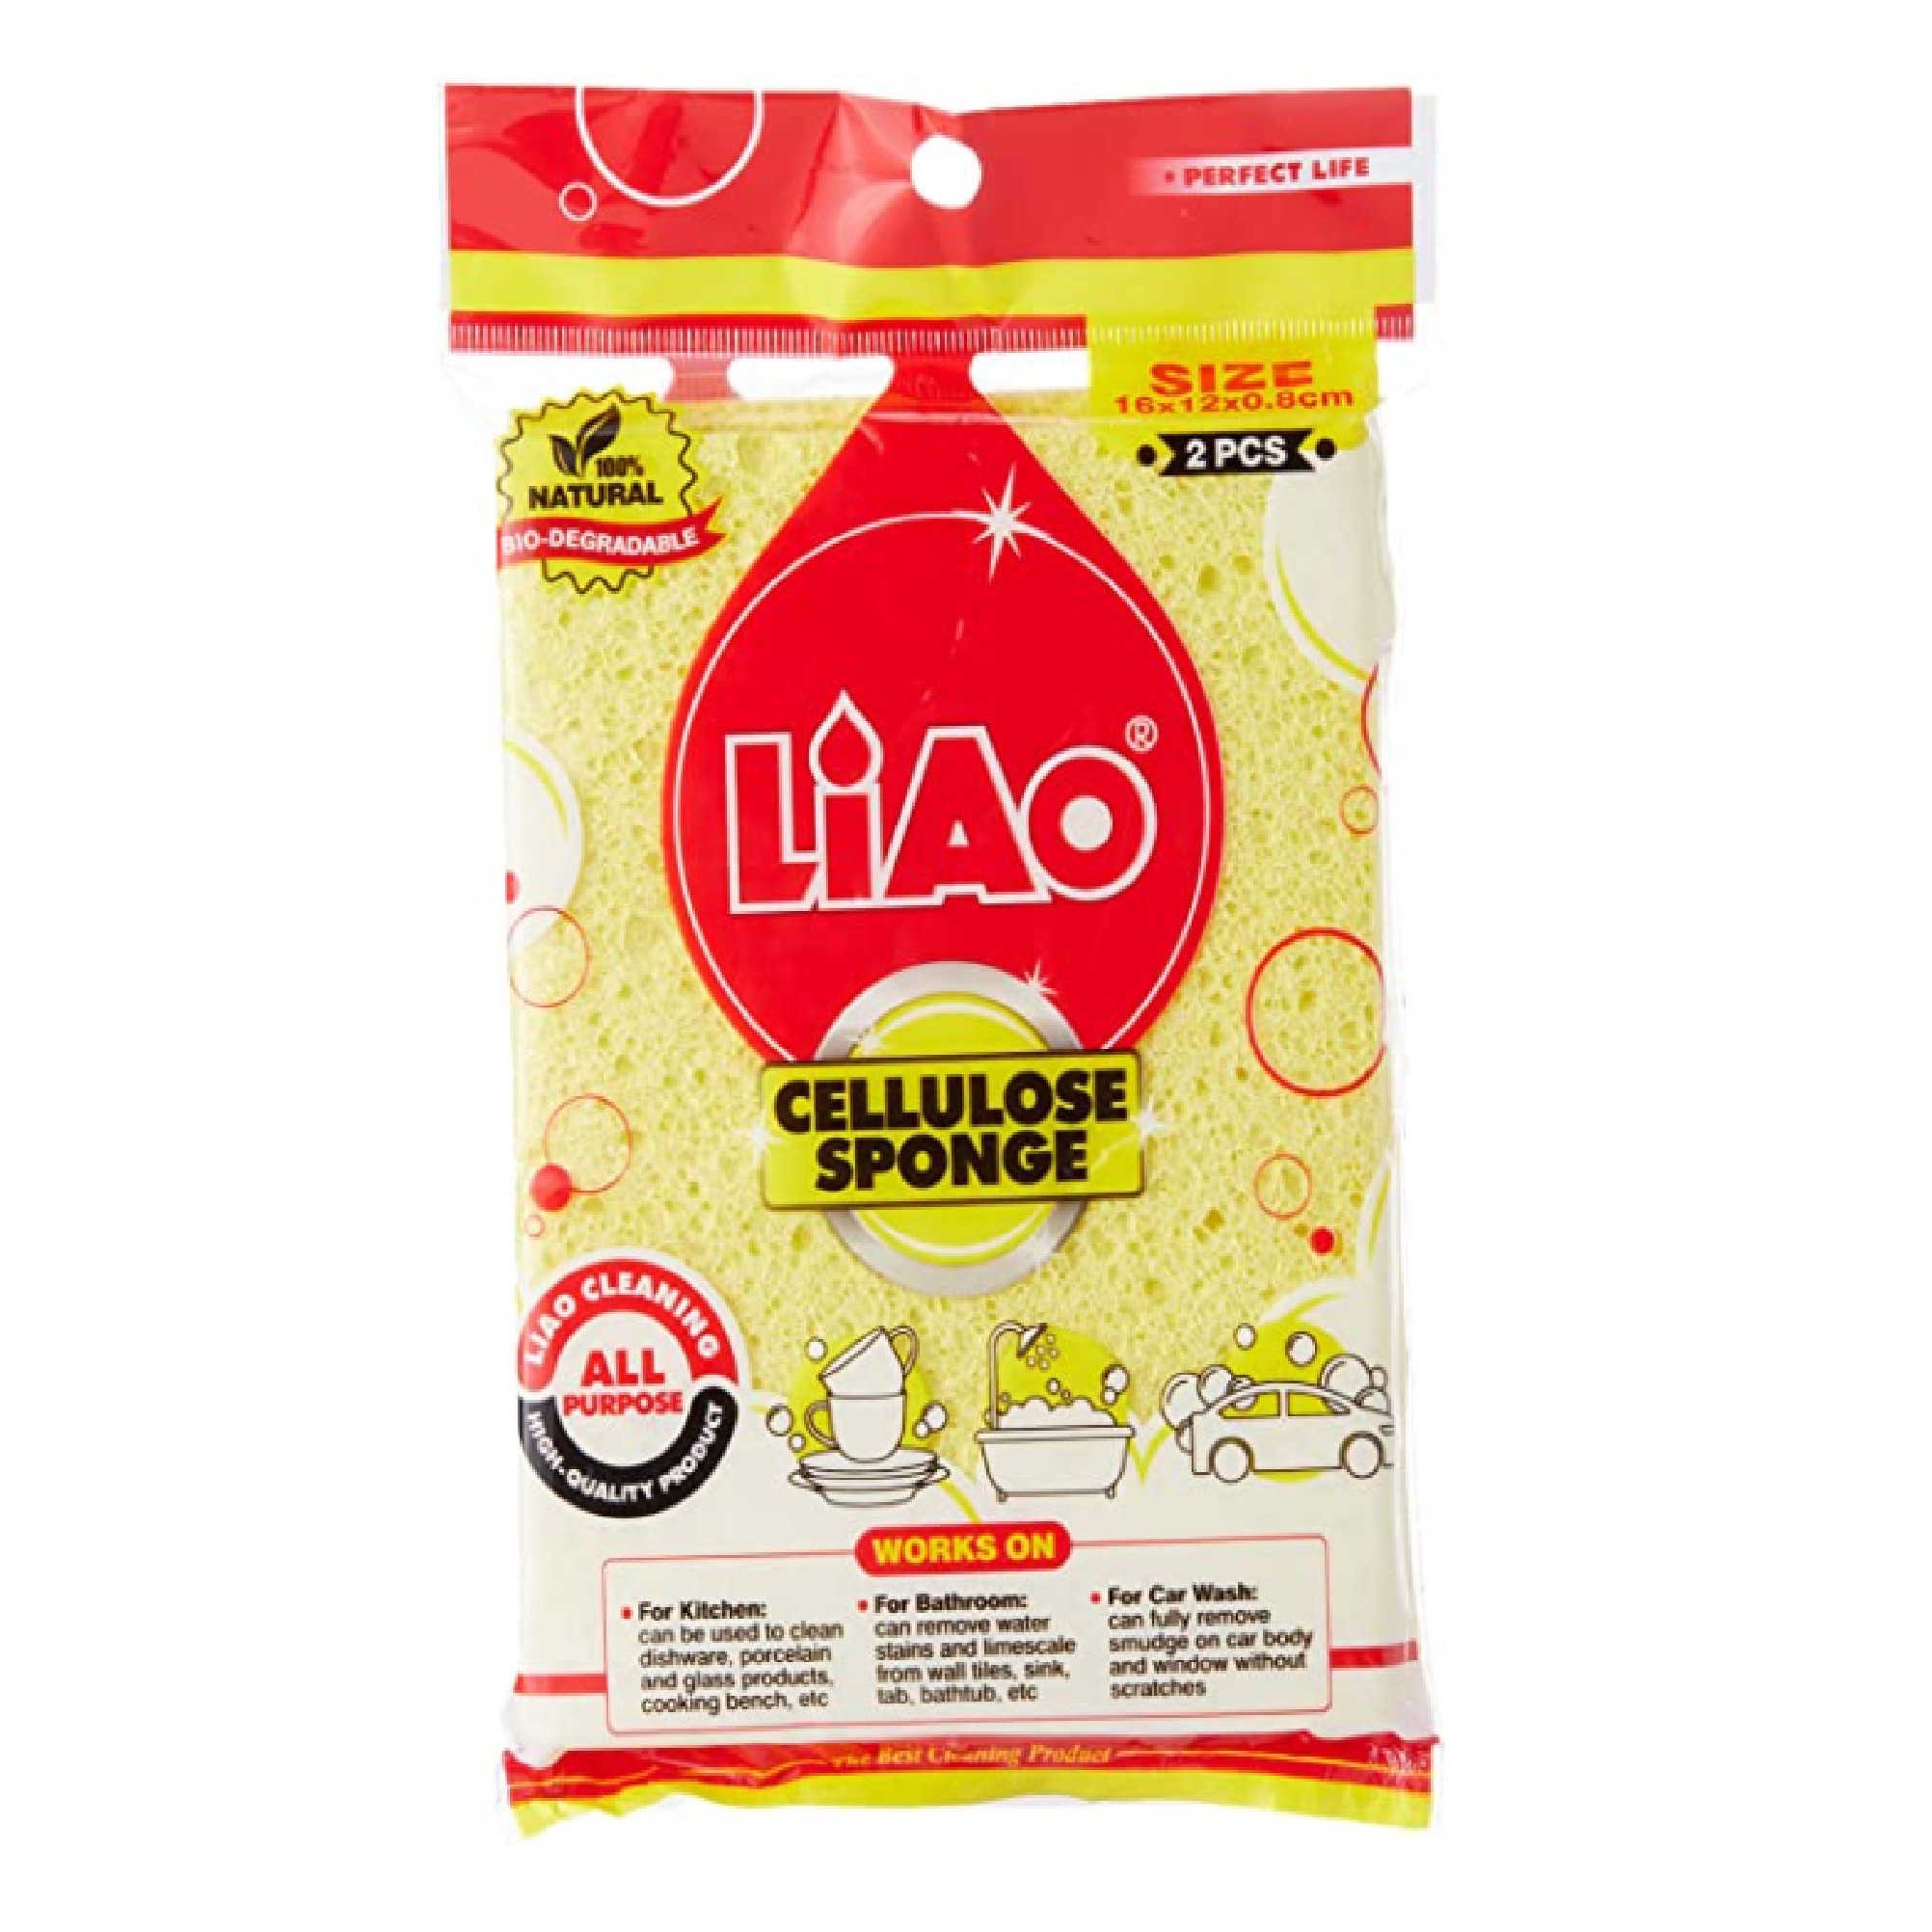 LIAO Cellulose Sponge Pad, 2PC/Pack